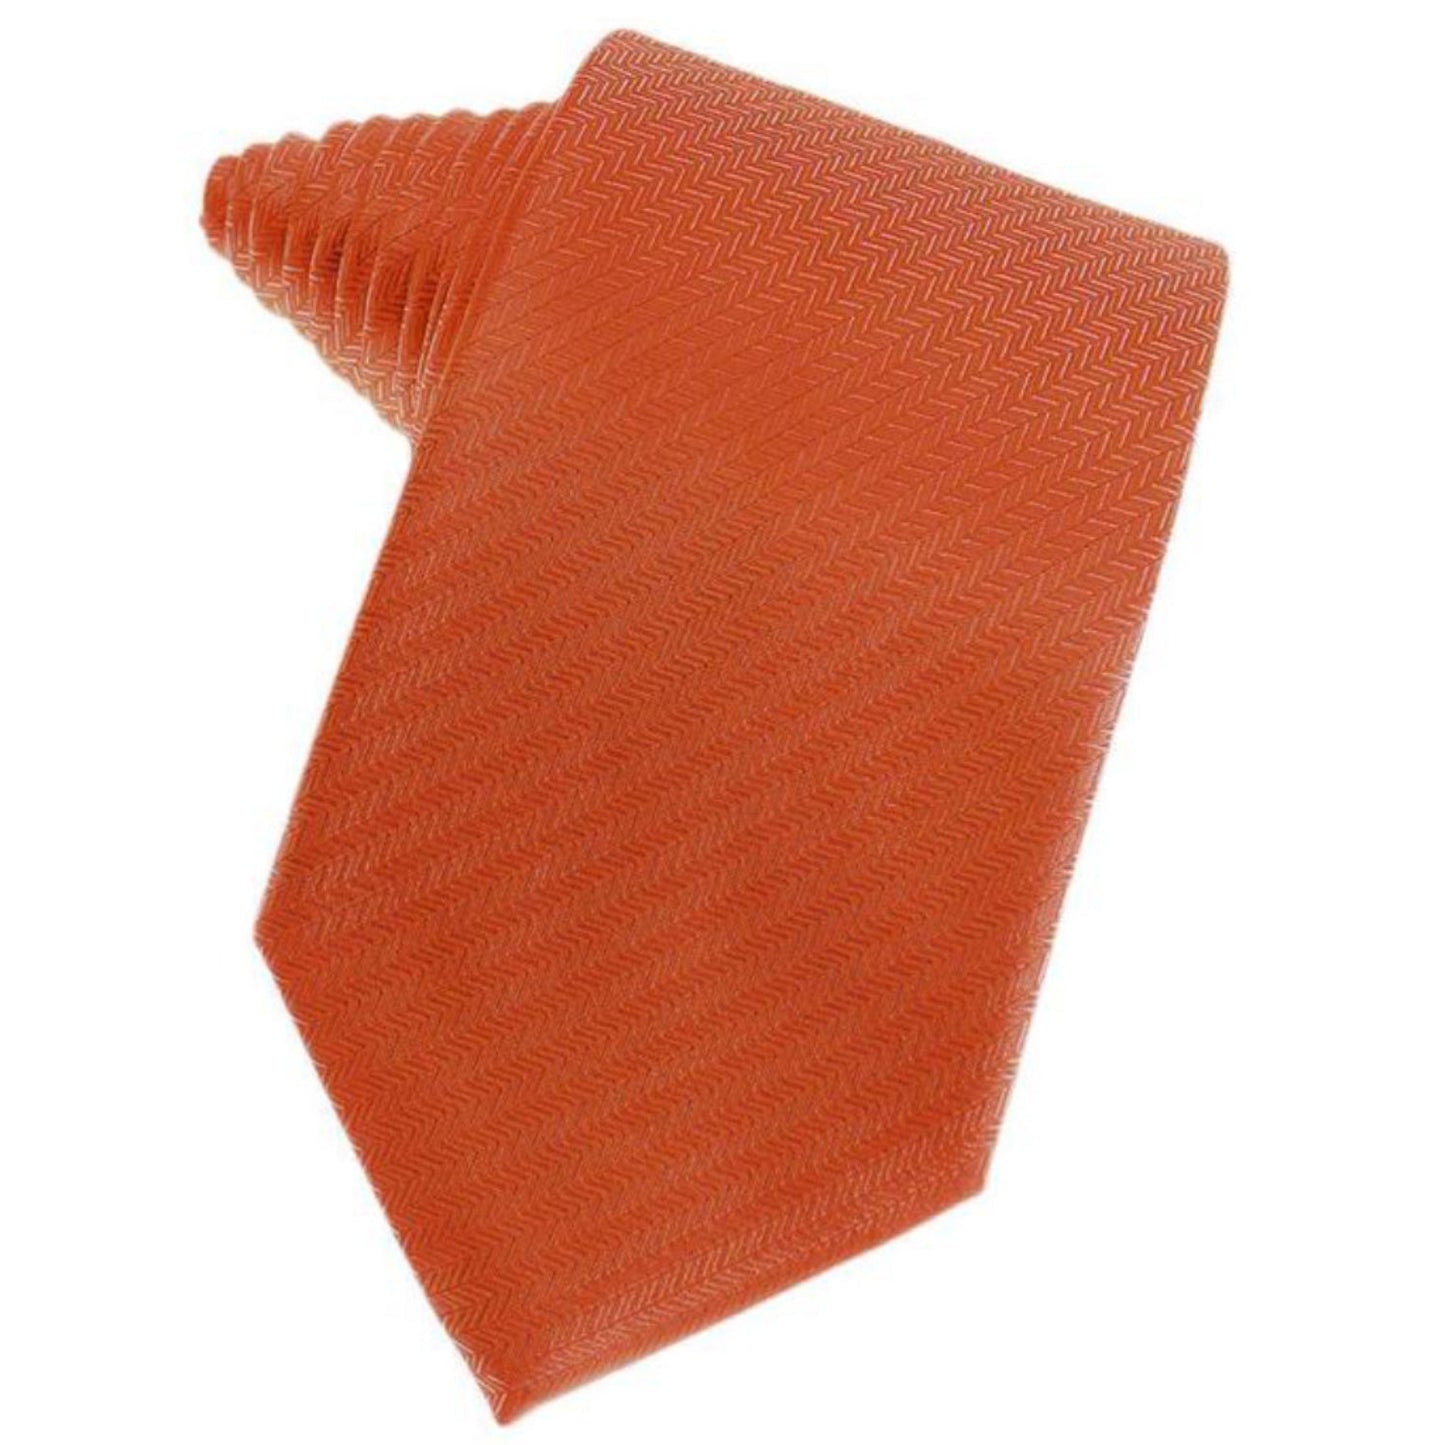 Herringbone Self-Tie Necktie